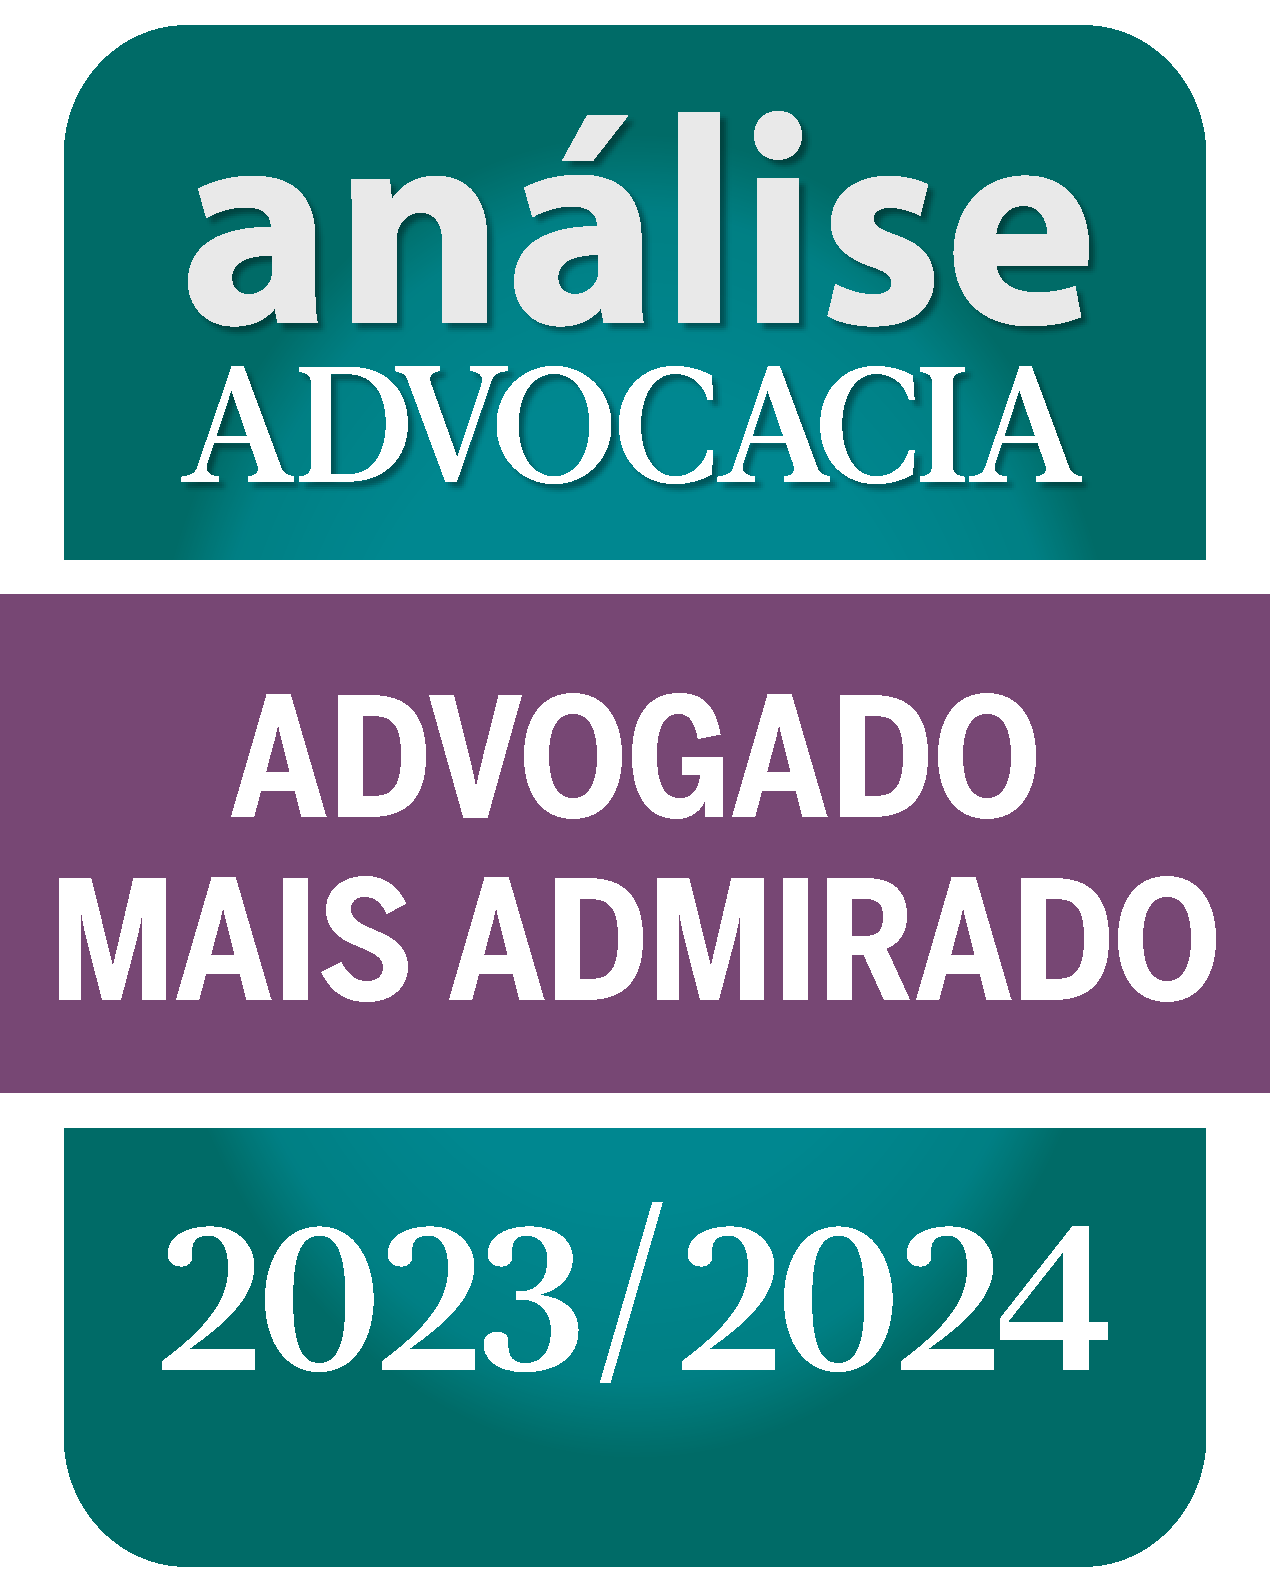 advogado-admirado-2023-2024